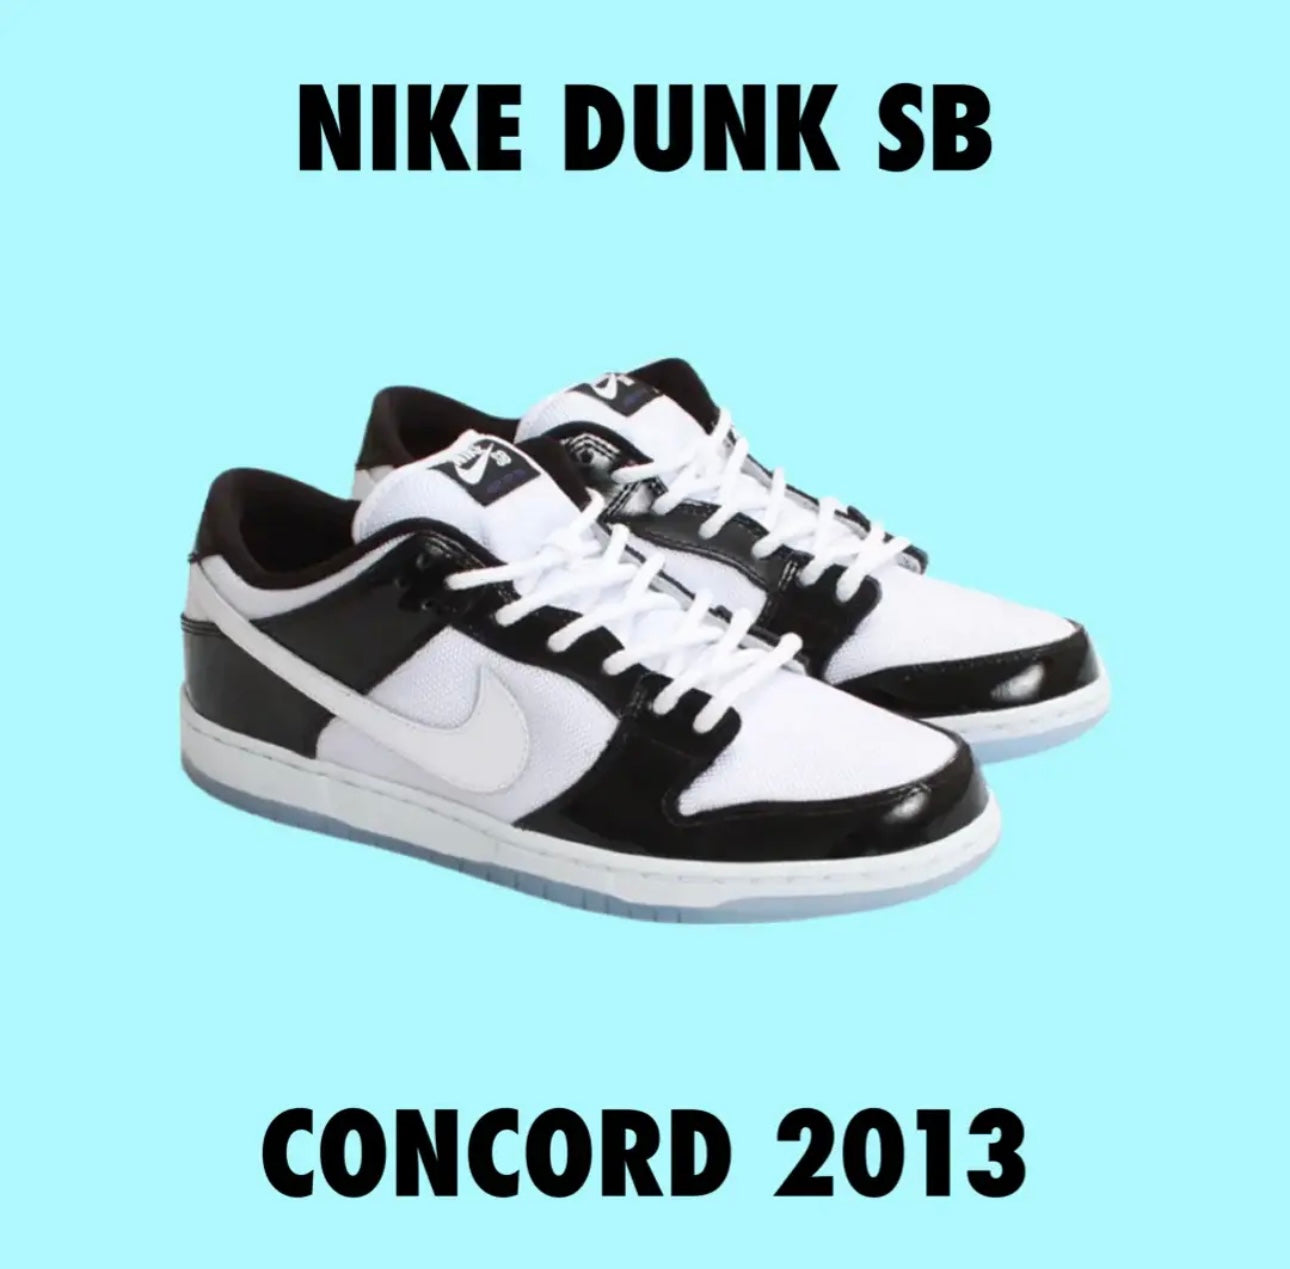 Nike Dunk SB Concord 2013